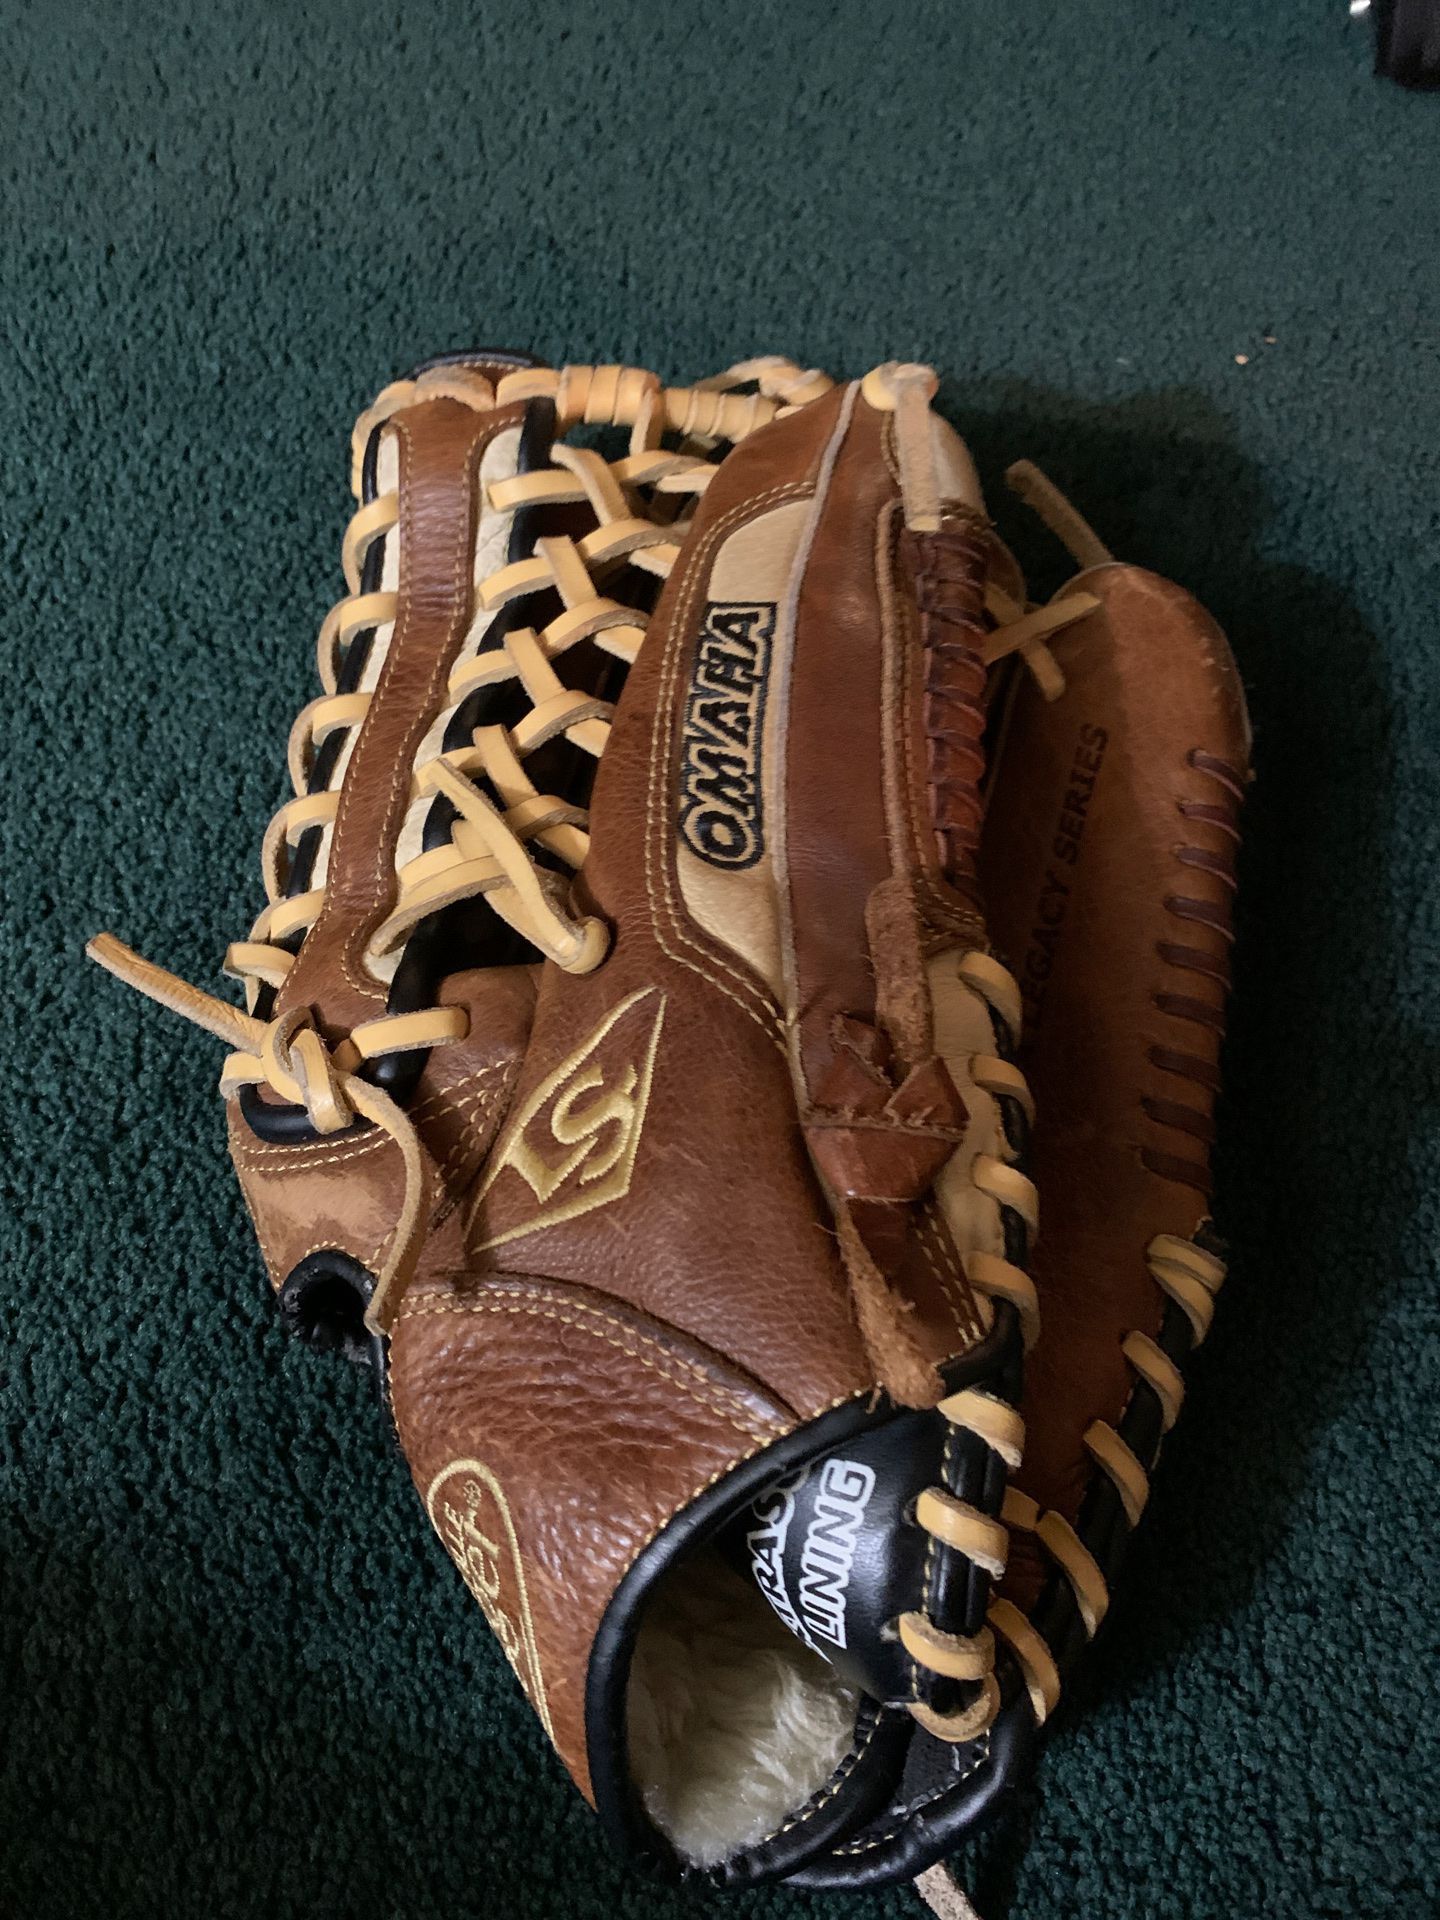 Louisville Slugger Omaha Baseball glove